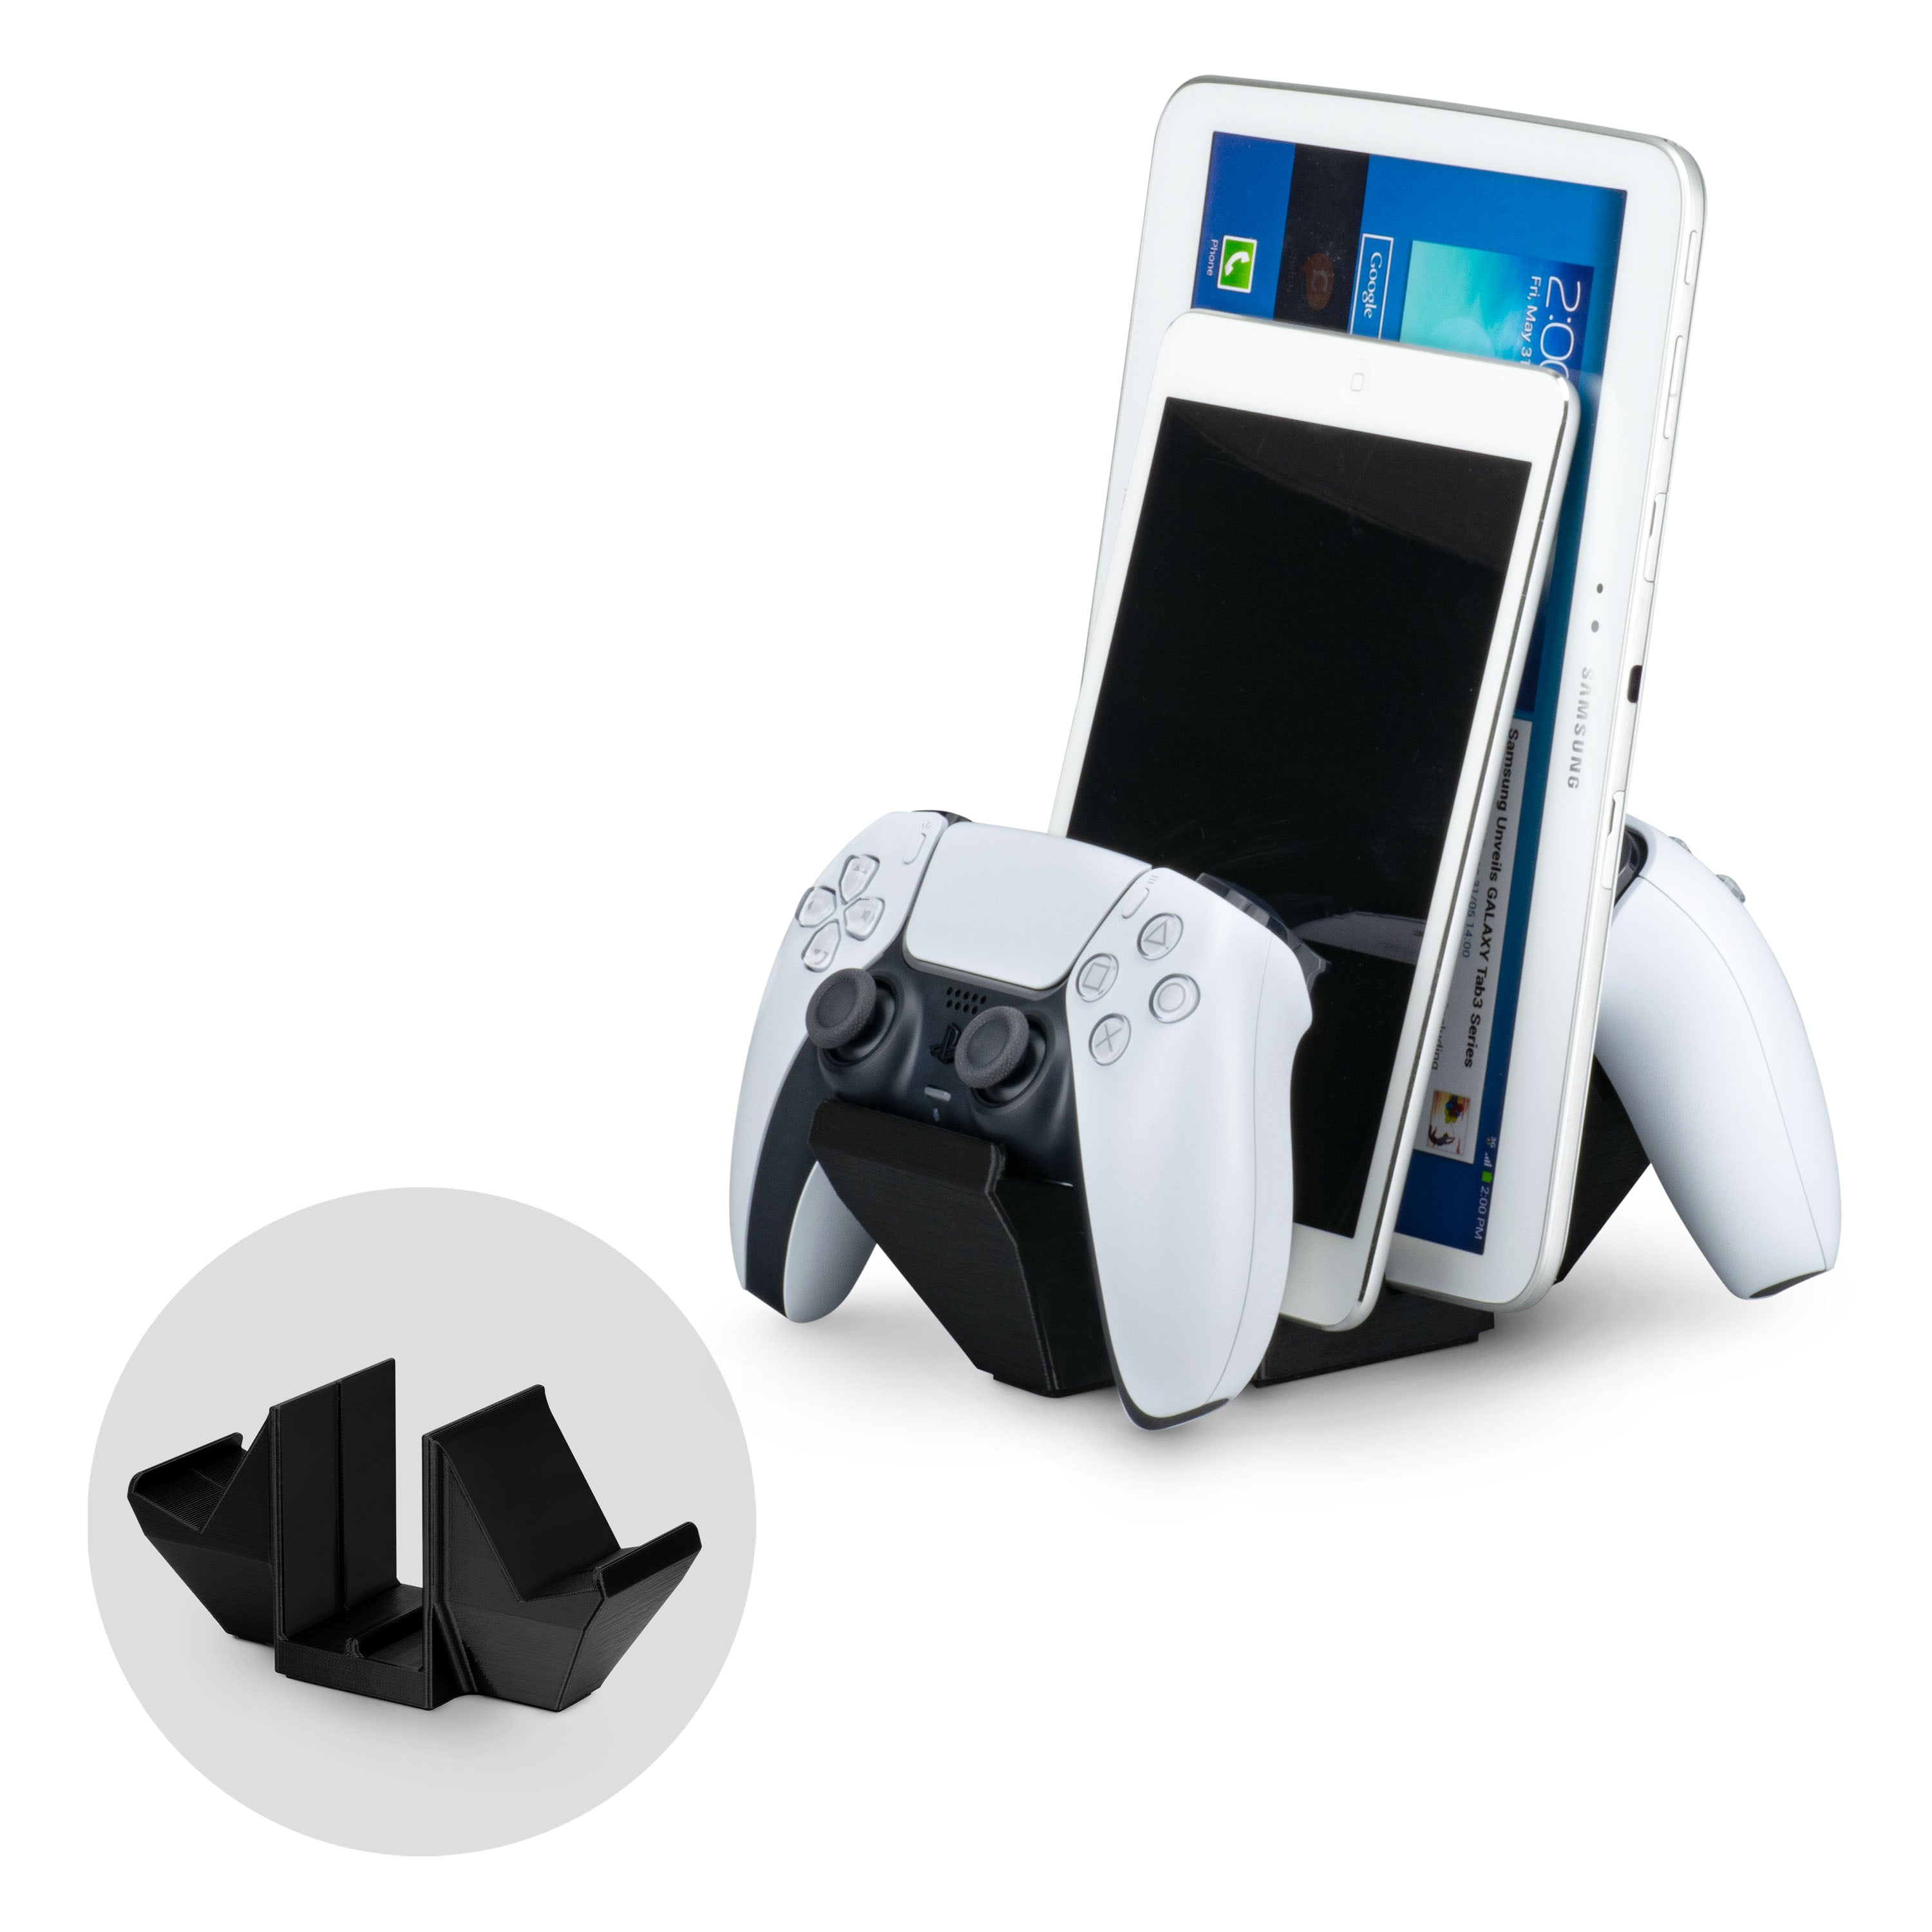 Dual Game Controller Desktop Holder Stand - Universal Design for